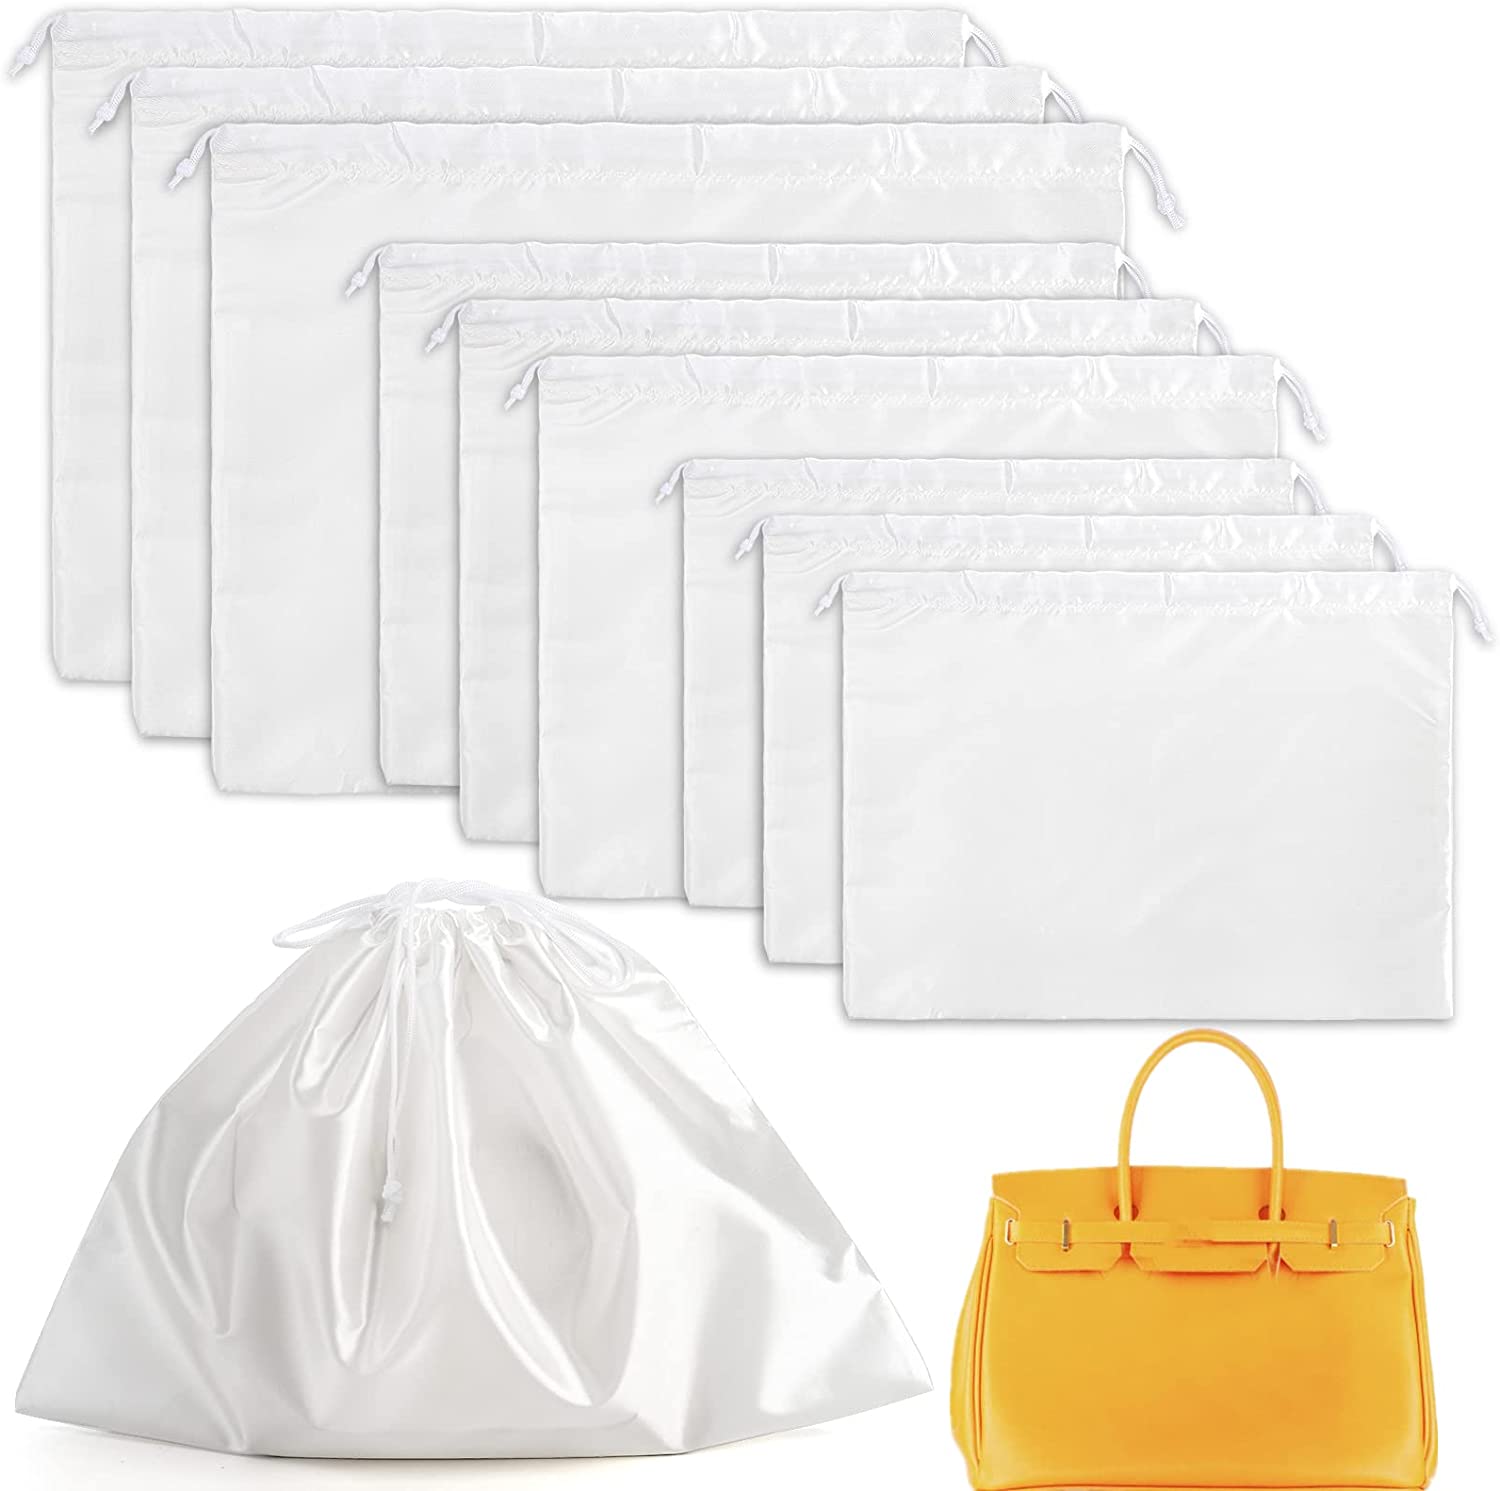 20 Pcs Silk Satin Dust Bags for Handbags Drawstring Dust Cover Bag